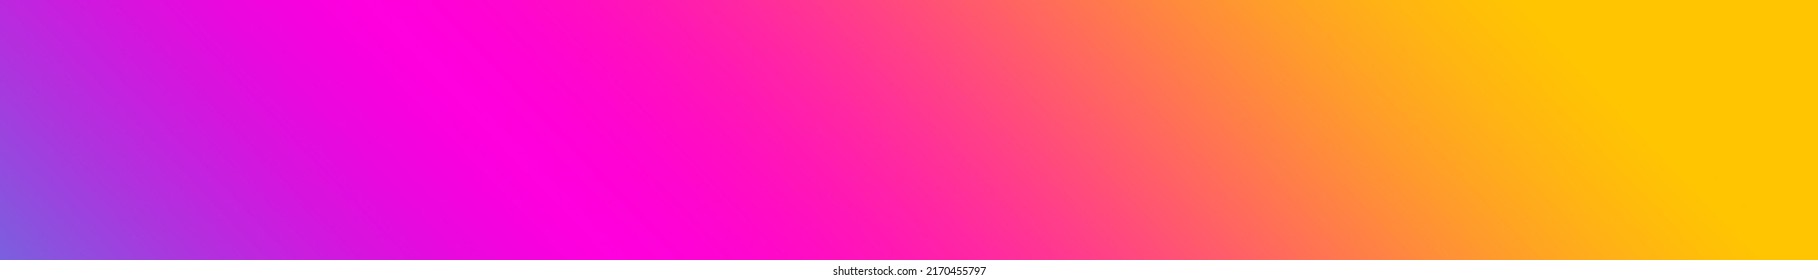 blur background design colorful